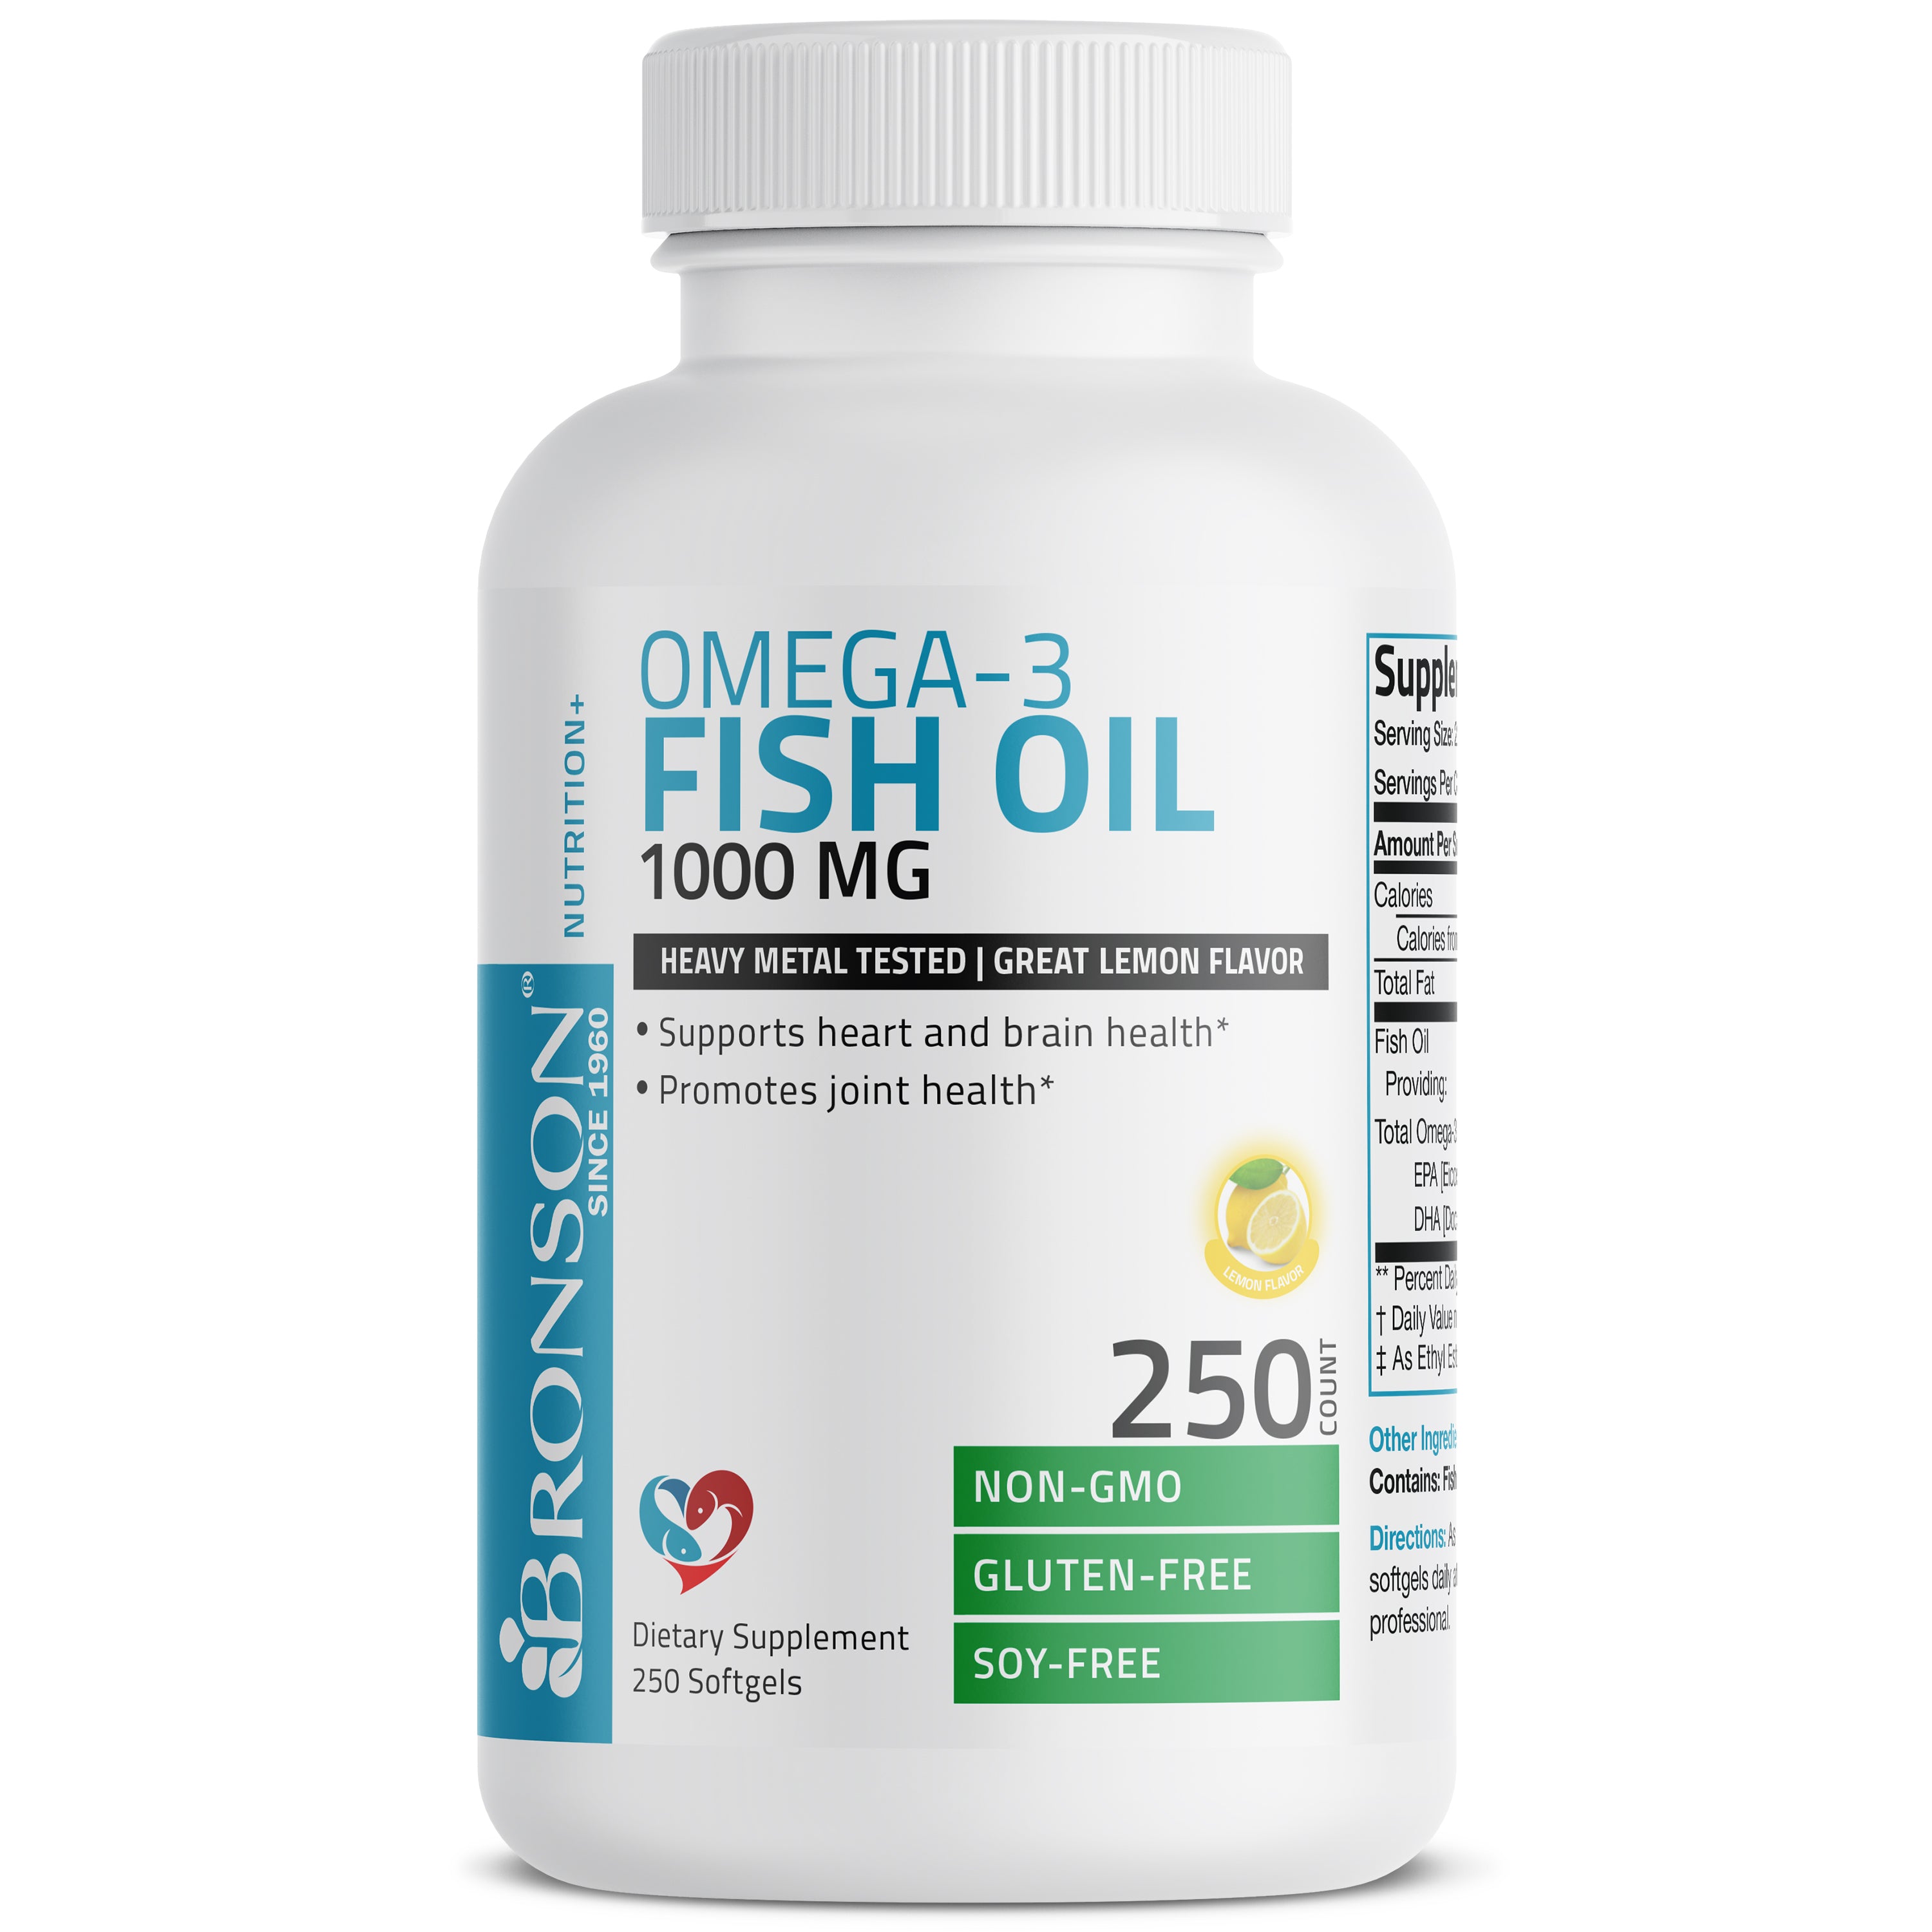 Omega-3 Fish Oil  EPA & DHA - 1,000 mg - 250 Softgels view 3 of 6